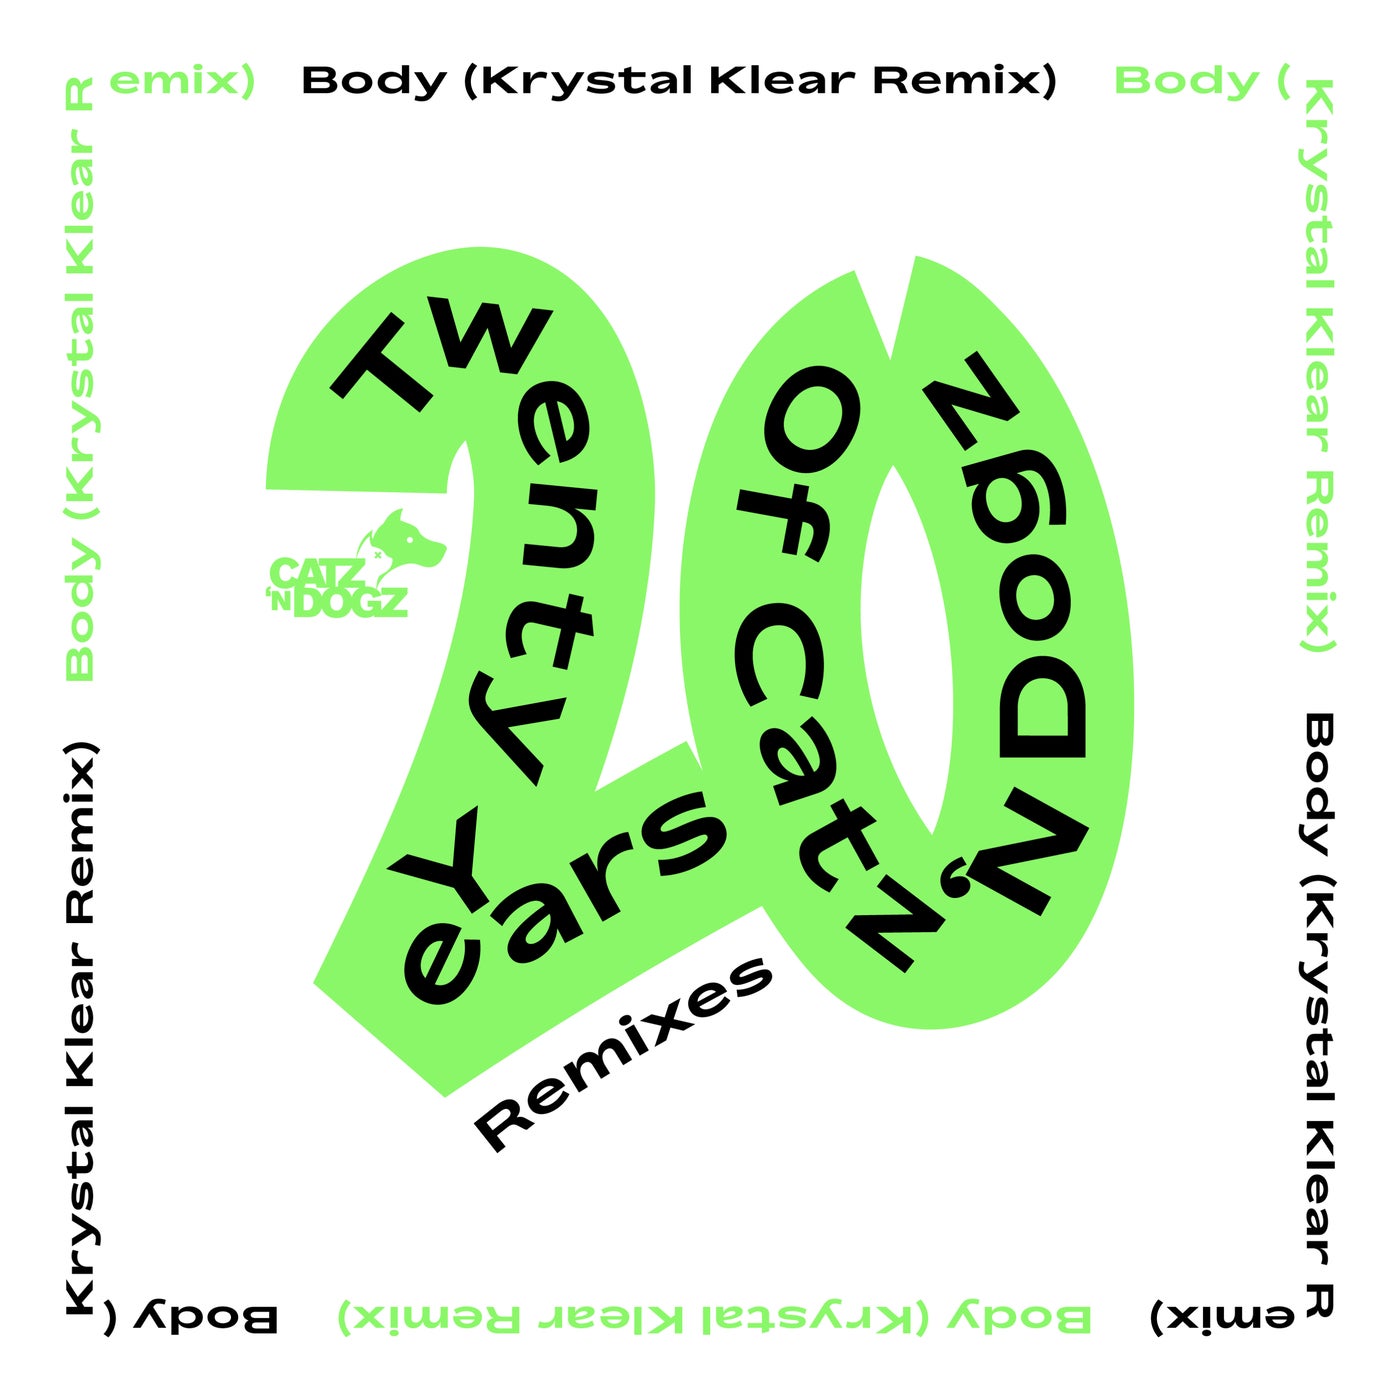 Body (Krystal Klear Remix)